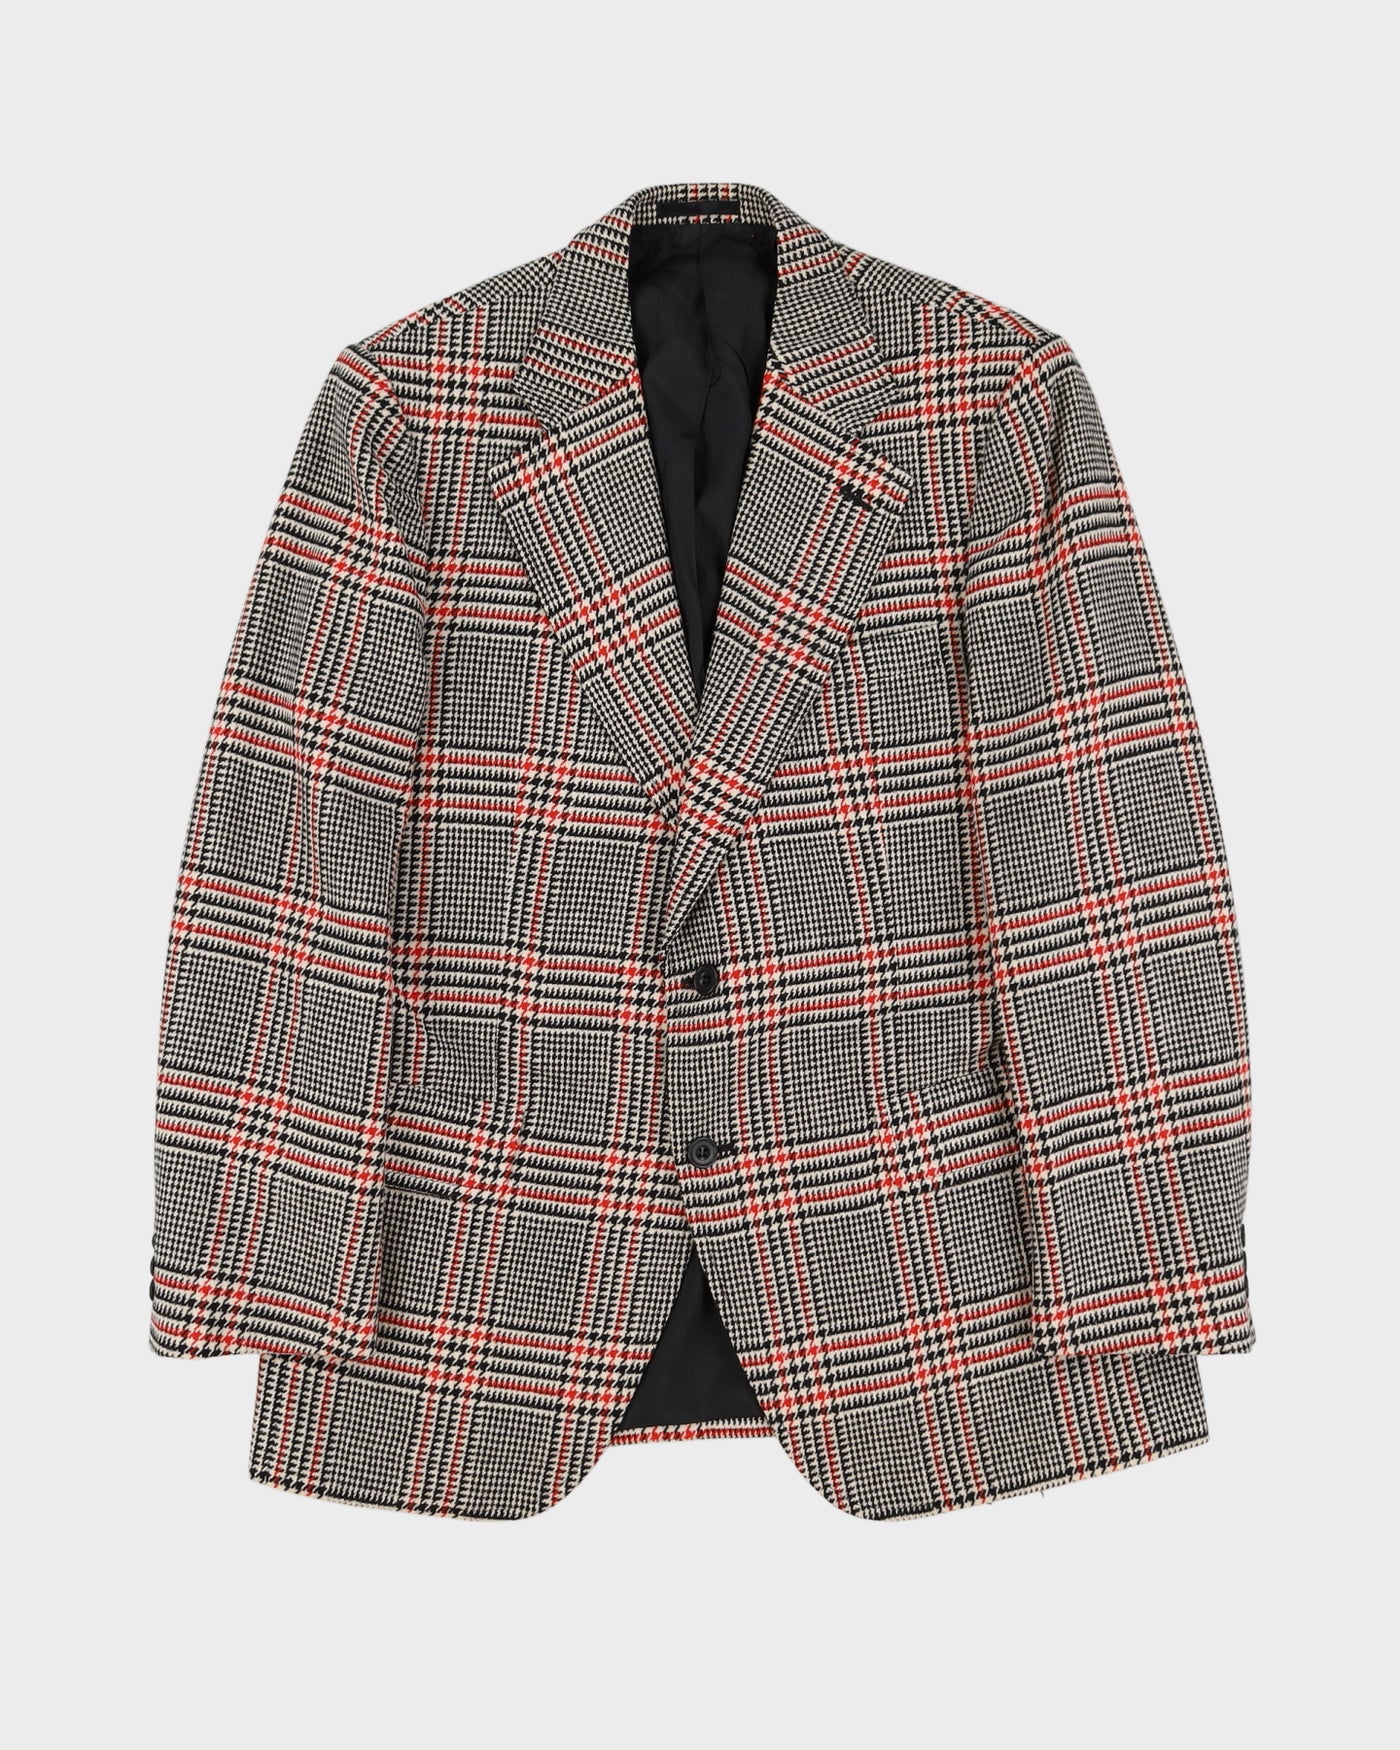 Burberrys Scottish Saxon Wool Tweed Blazer Jacket - S